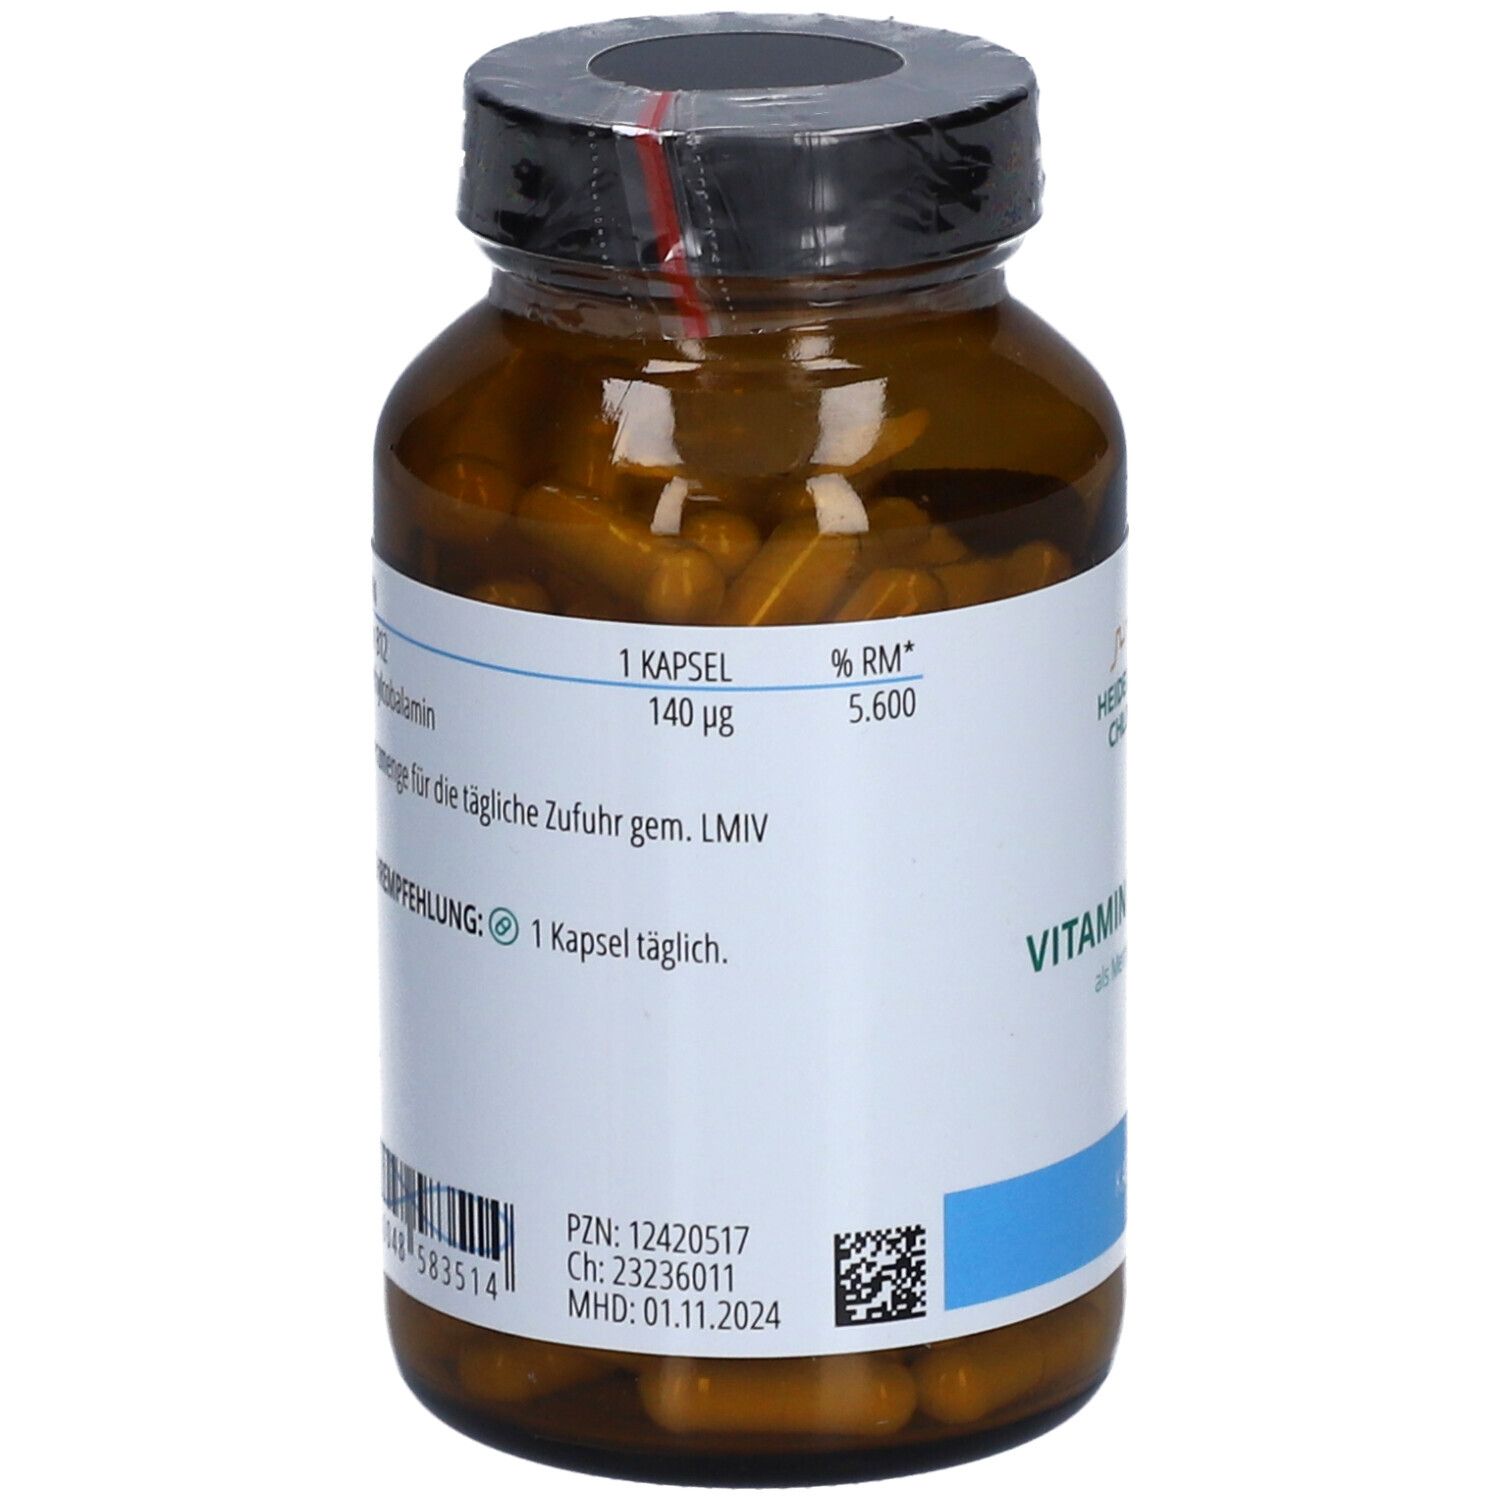 Heidelberger Chlorella® Vitamine B12